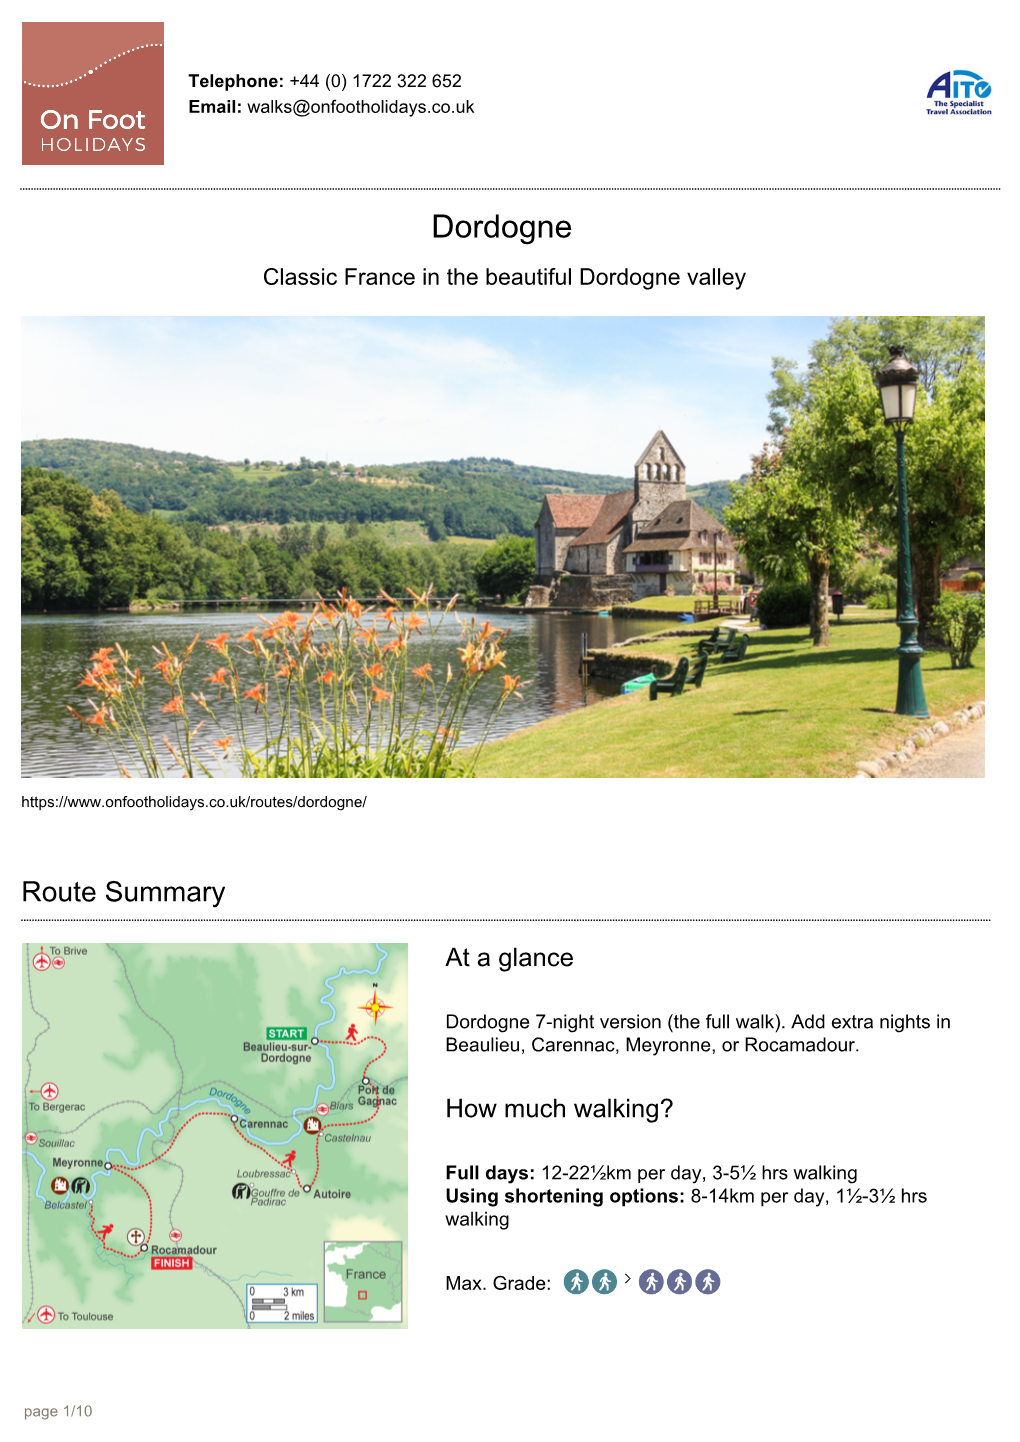 Dordogne Classic France in the Beautiful Dordogne Valley